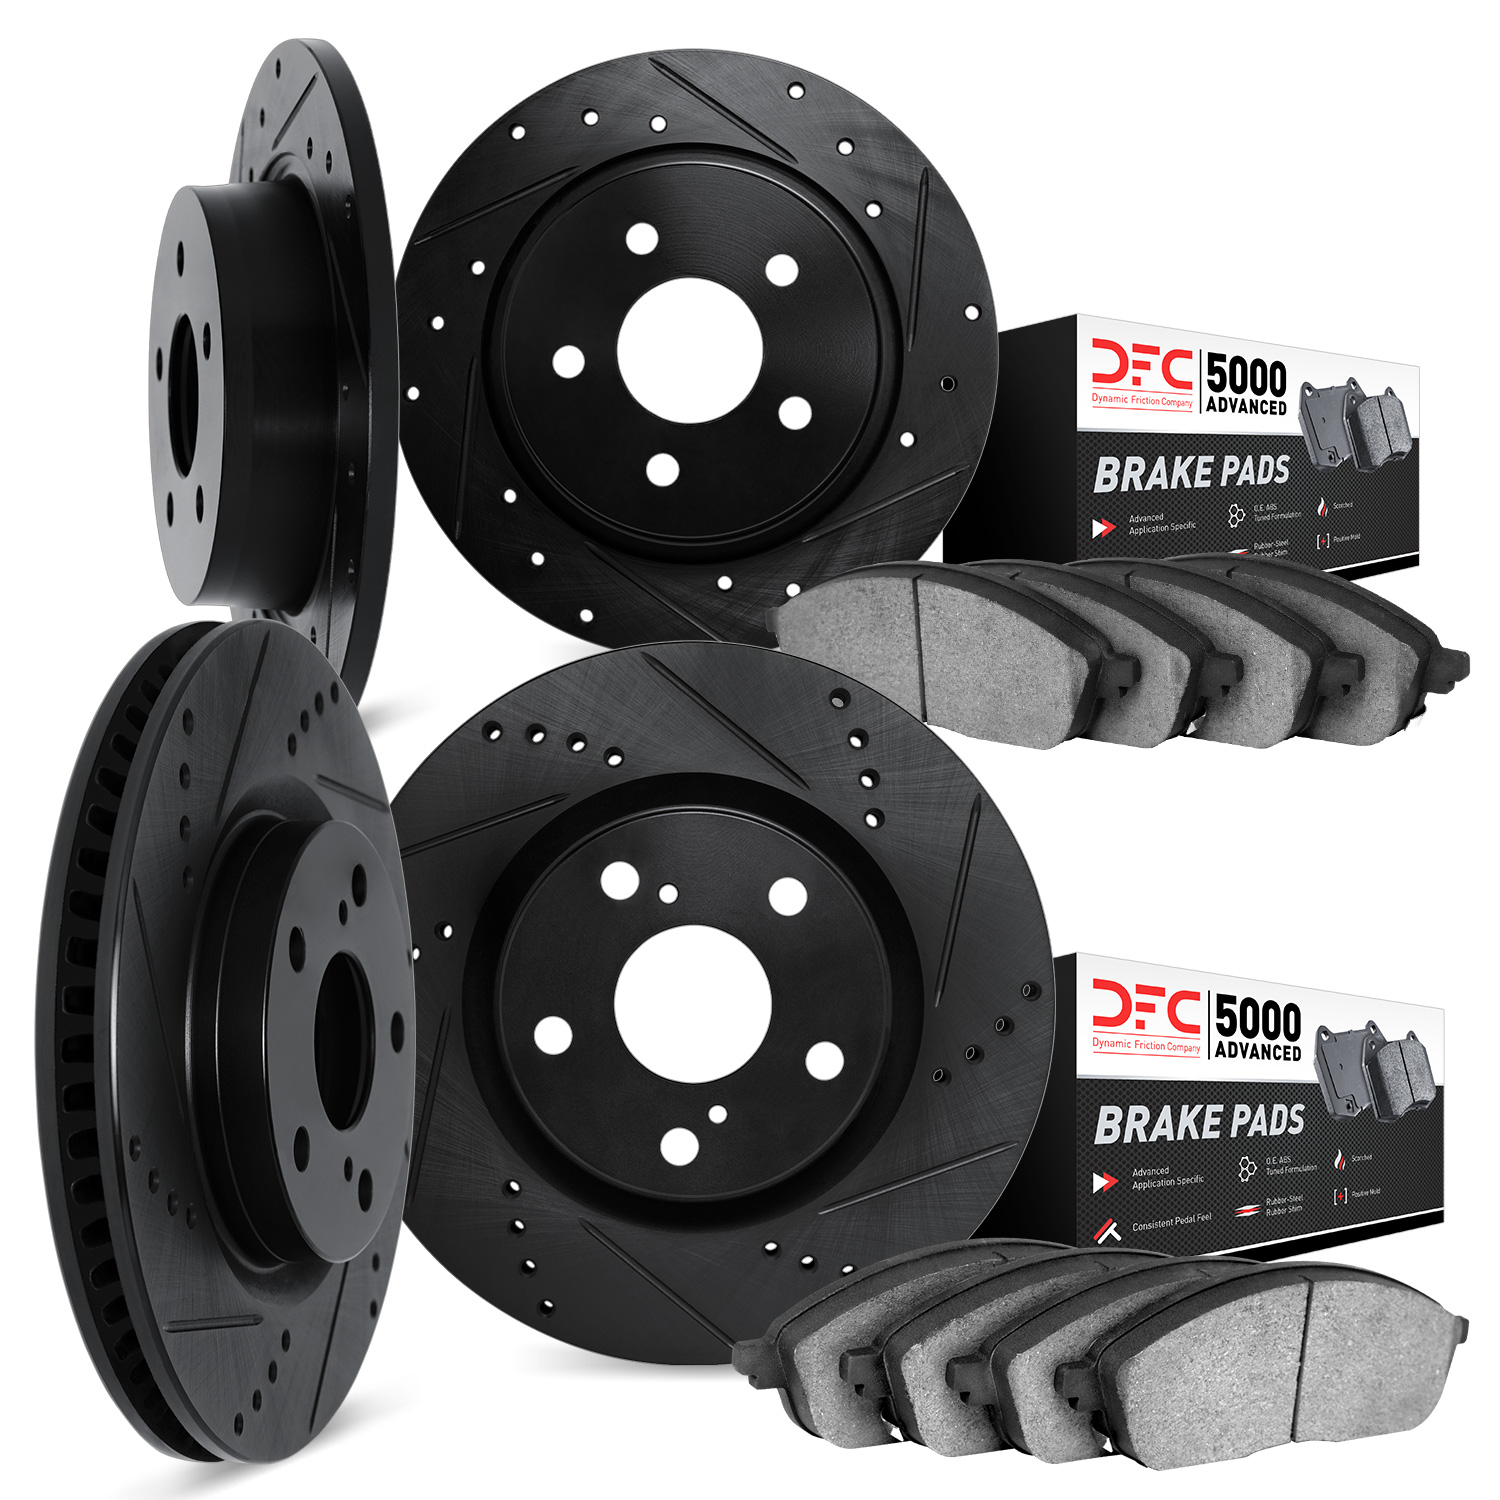 8504-76149 Drilled/Slotted Brake Rotors w/5000 Advanced Brake Pads Kit [Black], 2003-2008 Multiple Makes/Models, Position: Front